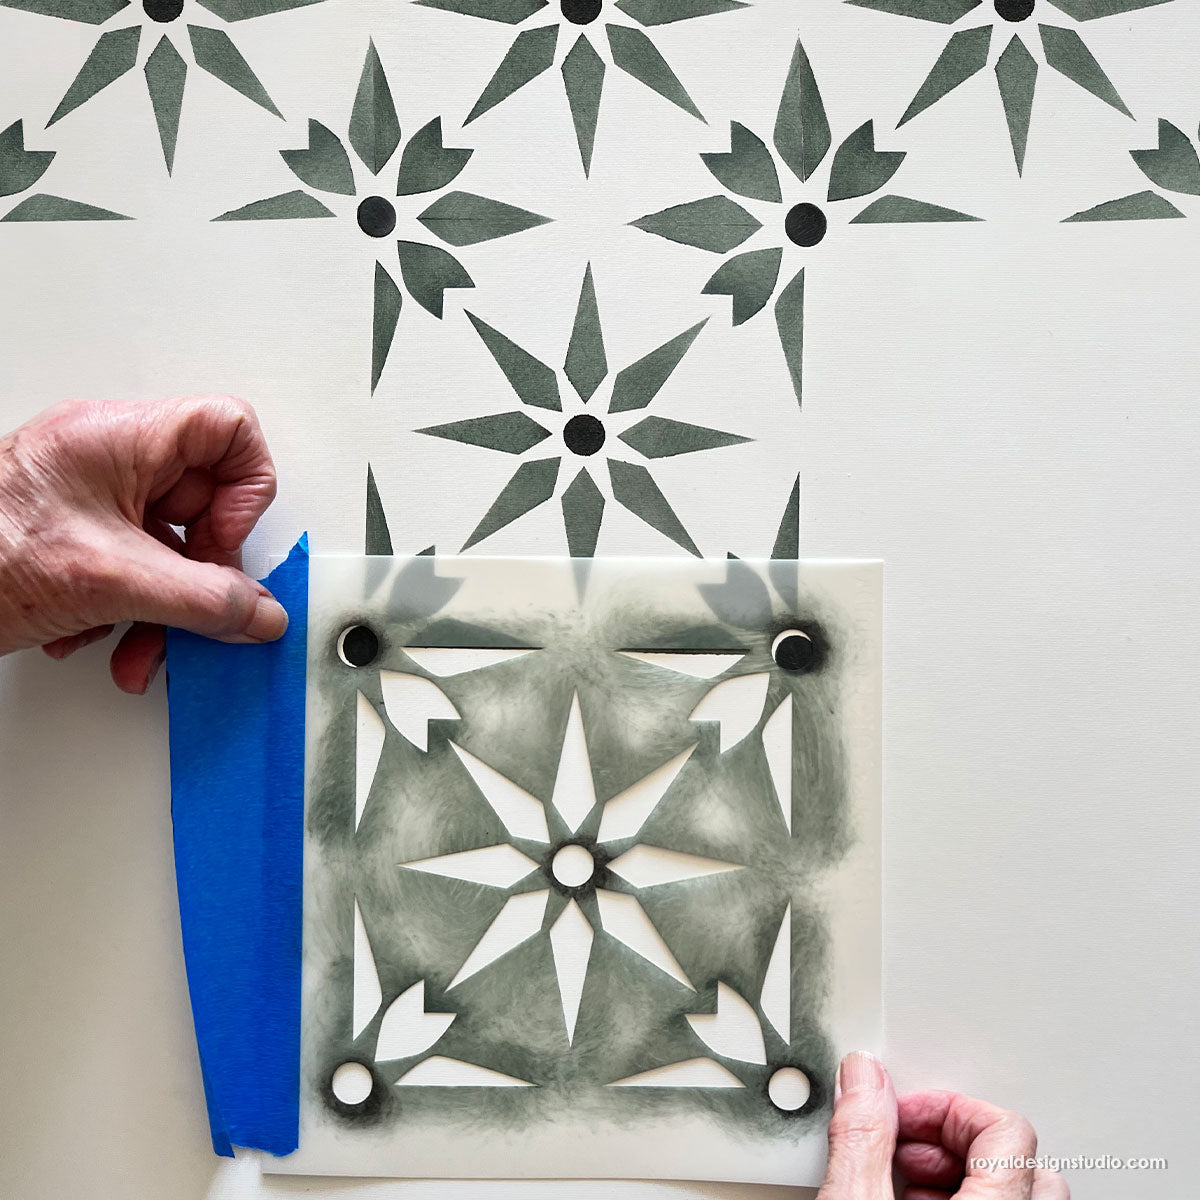 Tile Stencils for Painting Concrete Floors or Kitchen Backsplash